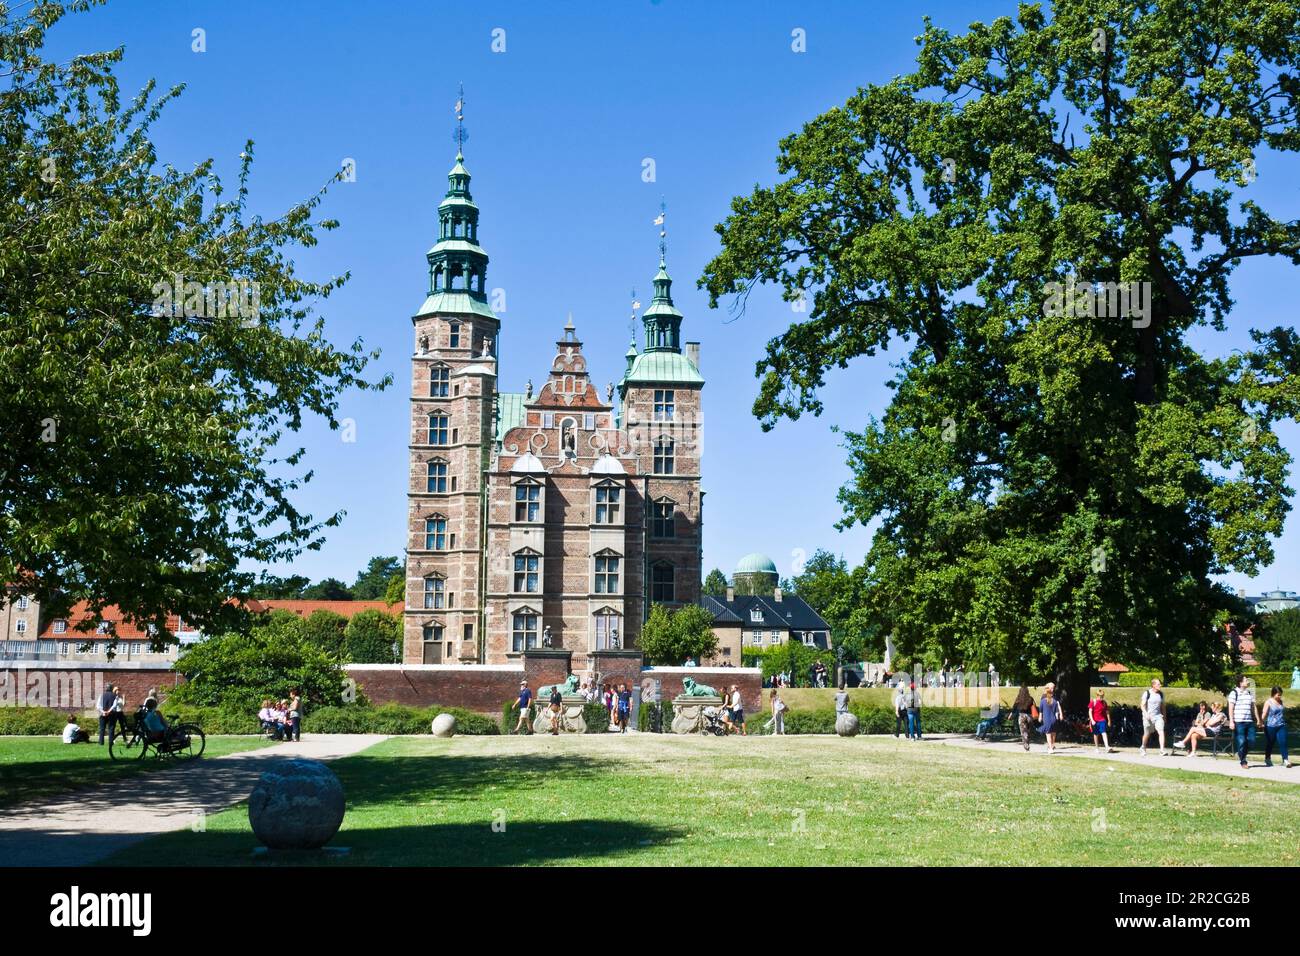 Rosenborg Palace, a landmark of Copenhagen is a famous sightseeing attraction of Denmark Stock Photo